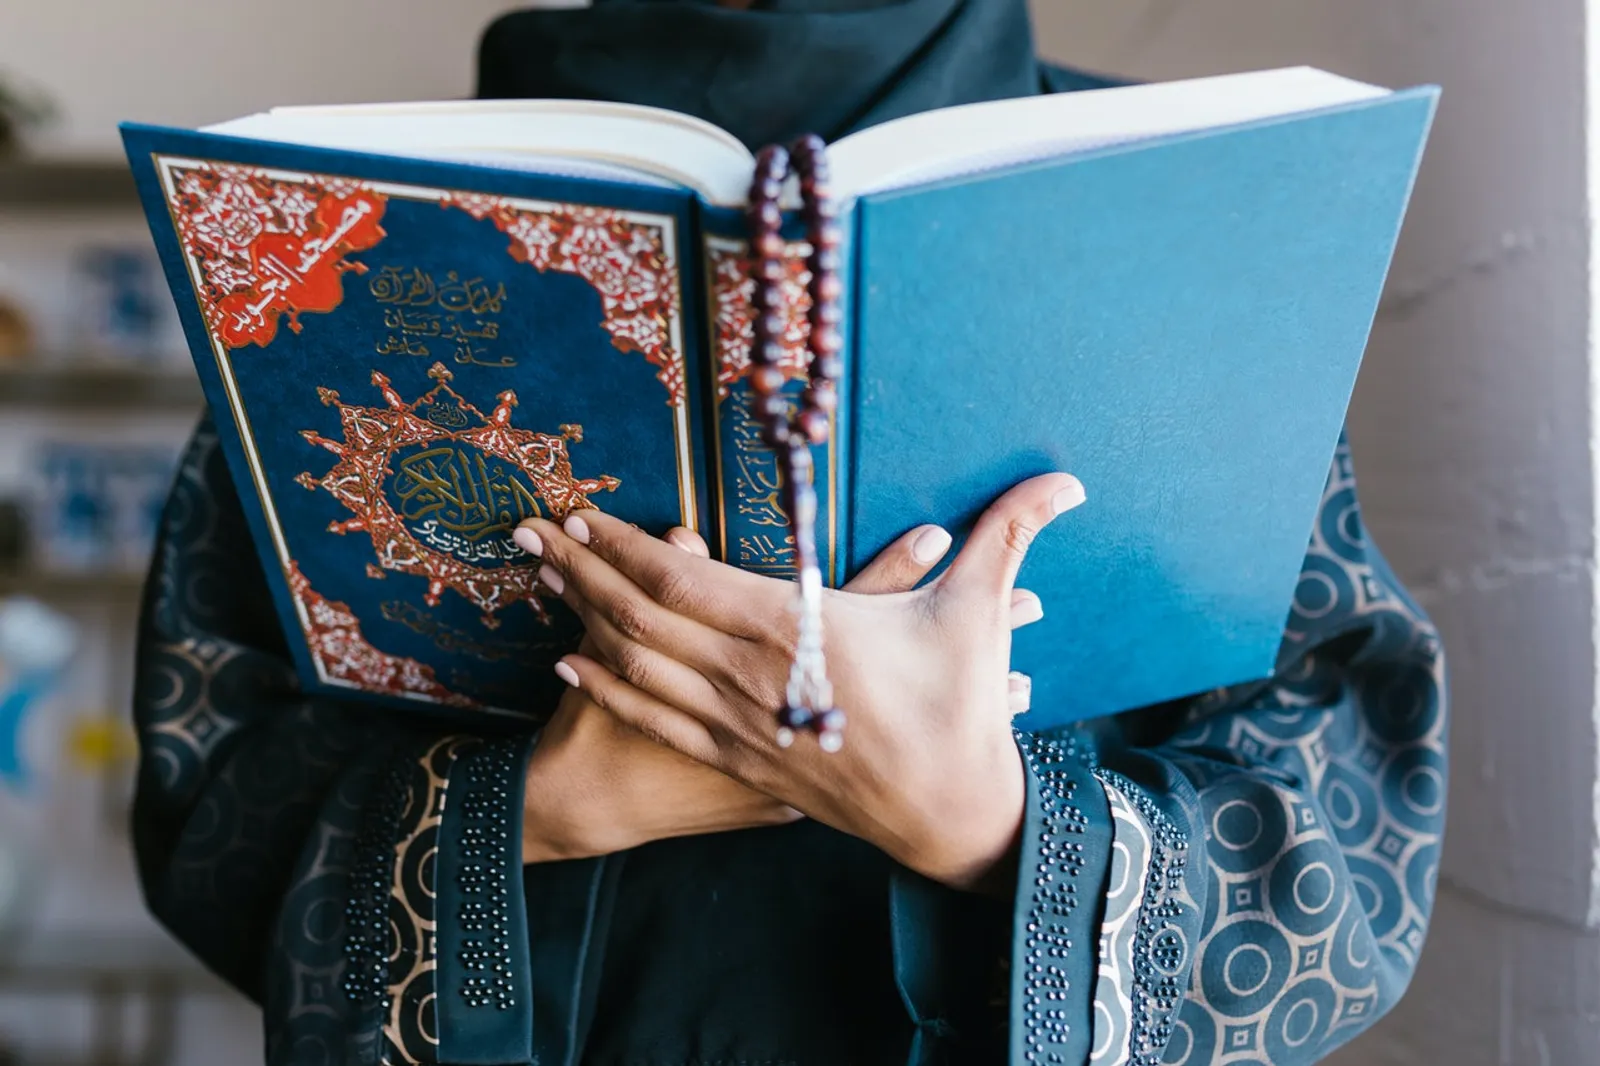 Bacaan Doa Tahlil Lengkap Beserta Arab, Latin dan Artinya